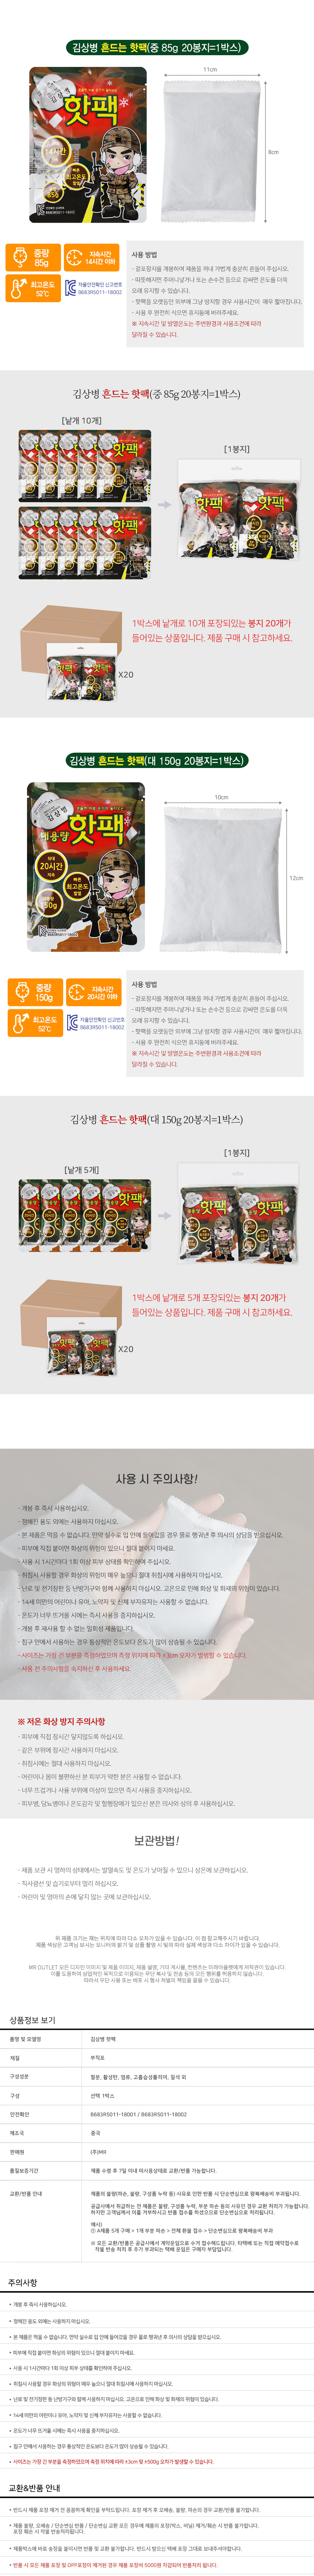 Kimsangbyeong_hotpackbox_03.jpg